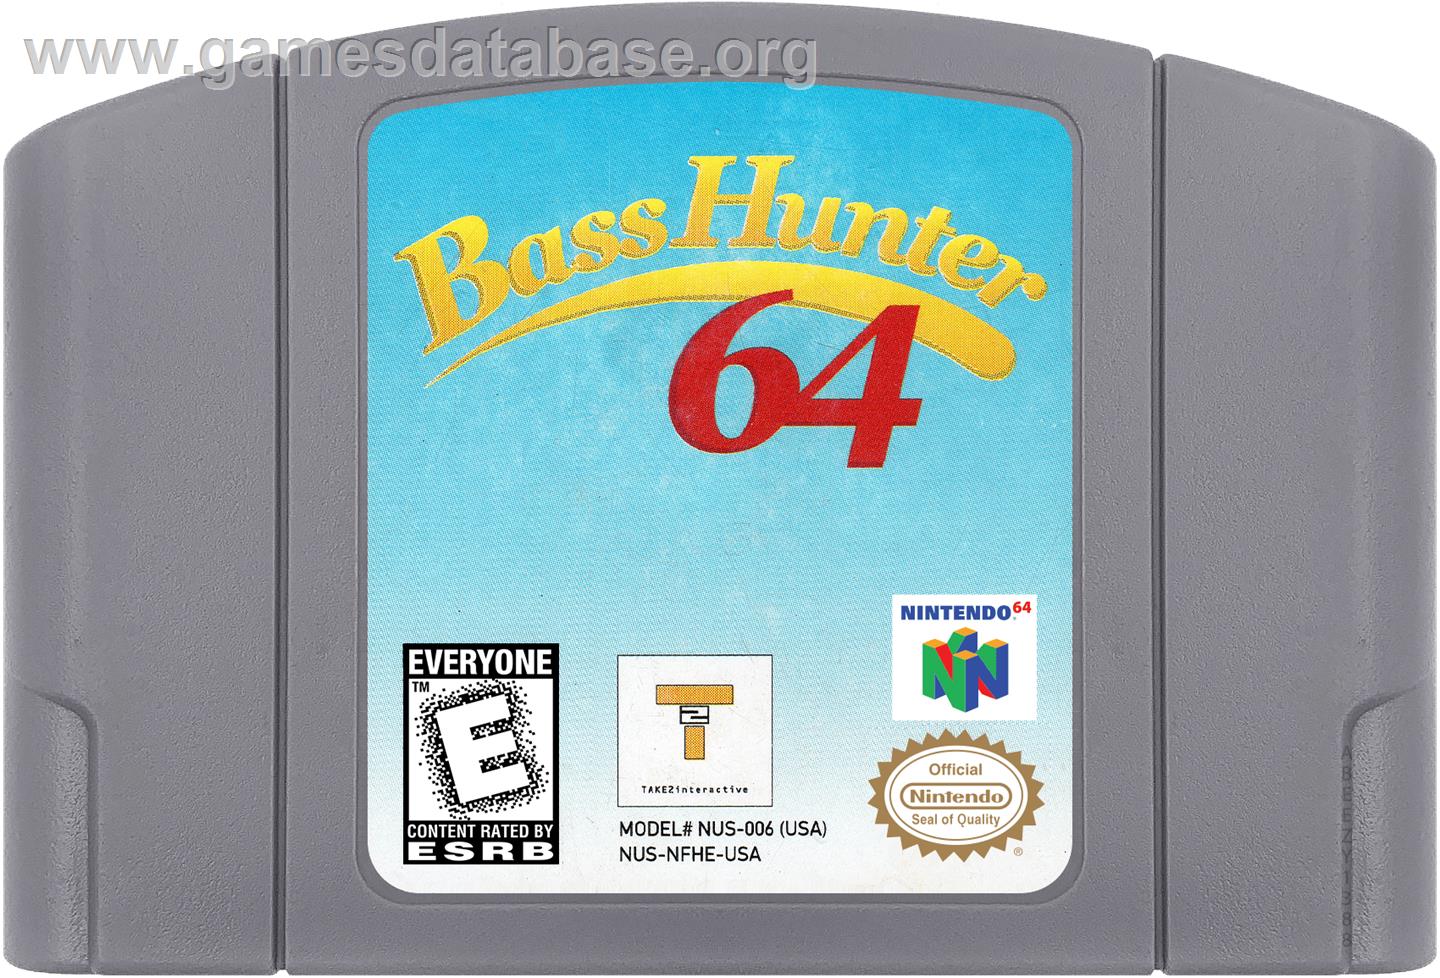 In-Fisherman Bass Hunter 64 - Nintendo N64 - Artwork - Cartridge